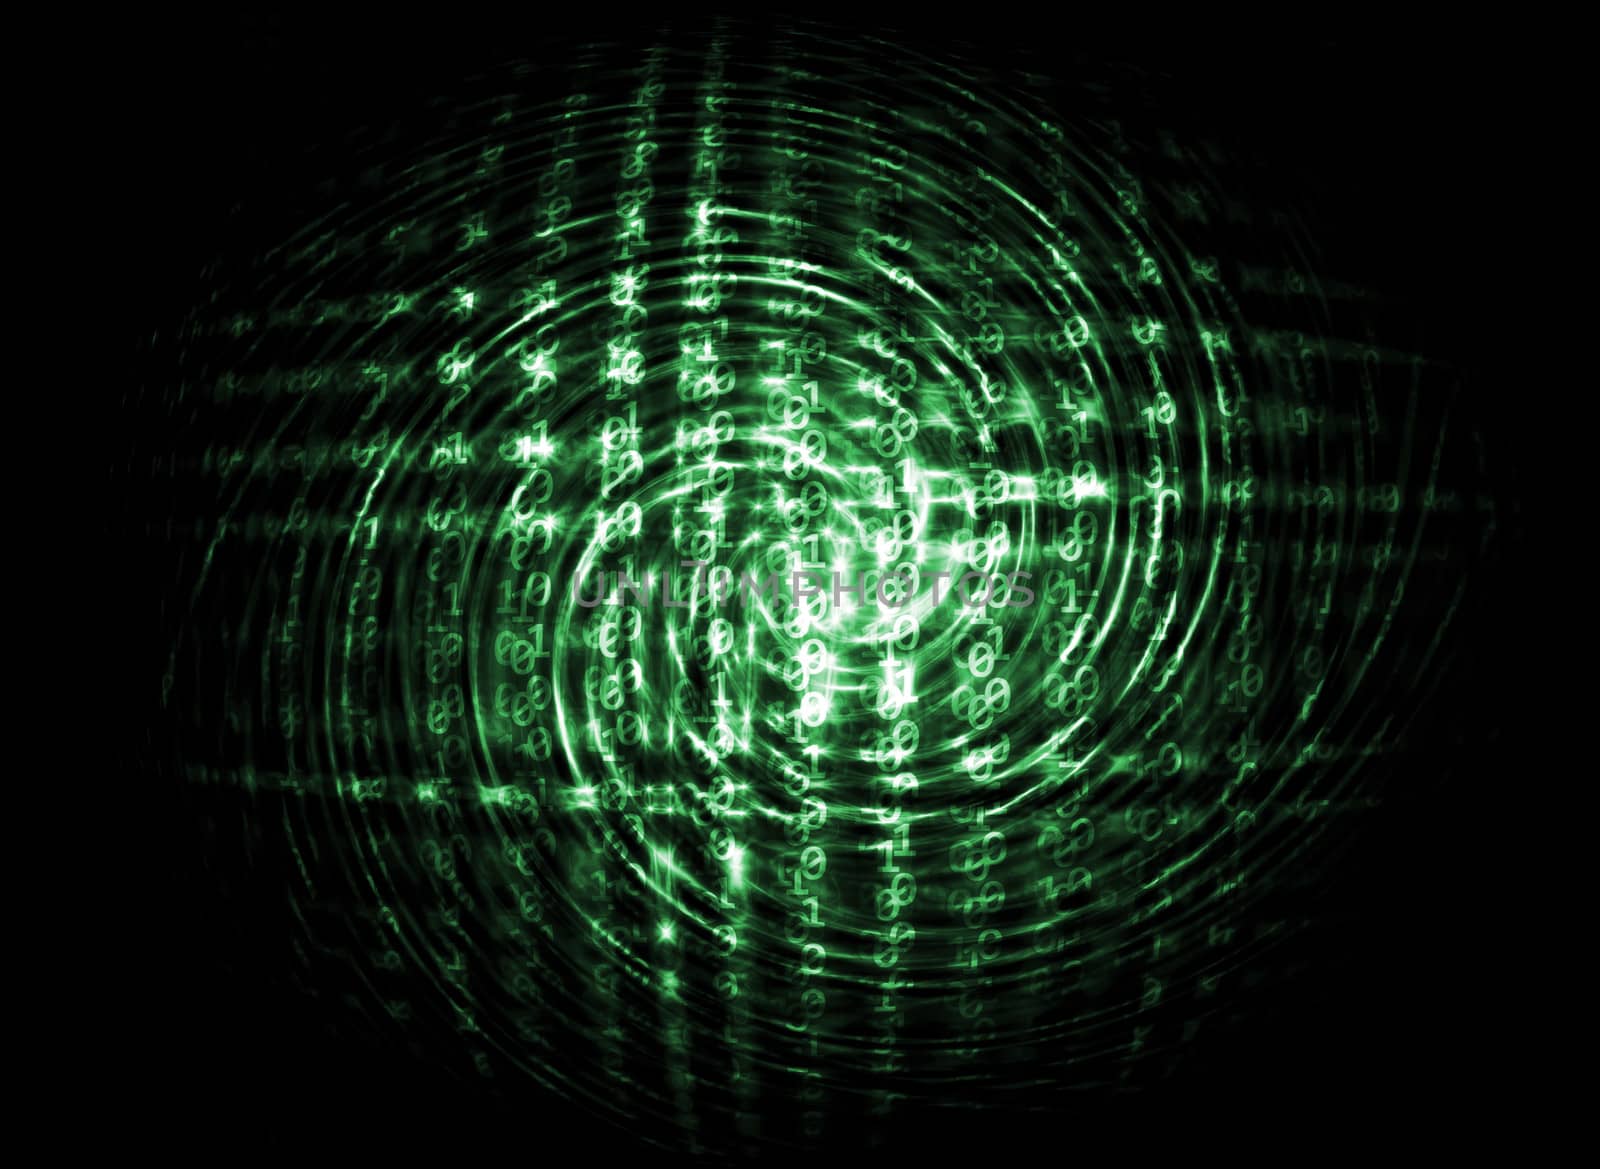 Glowing digital code on a dark background by cherezoff